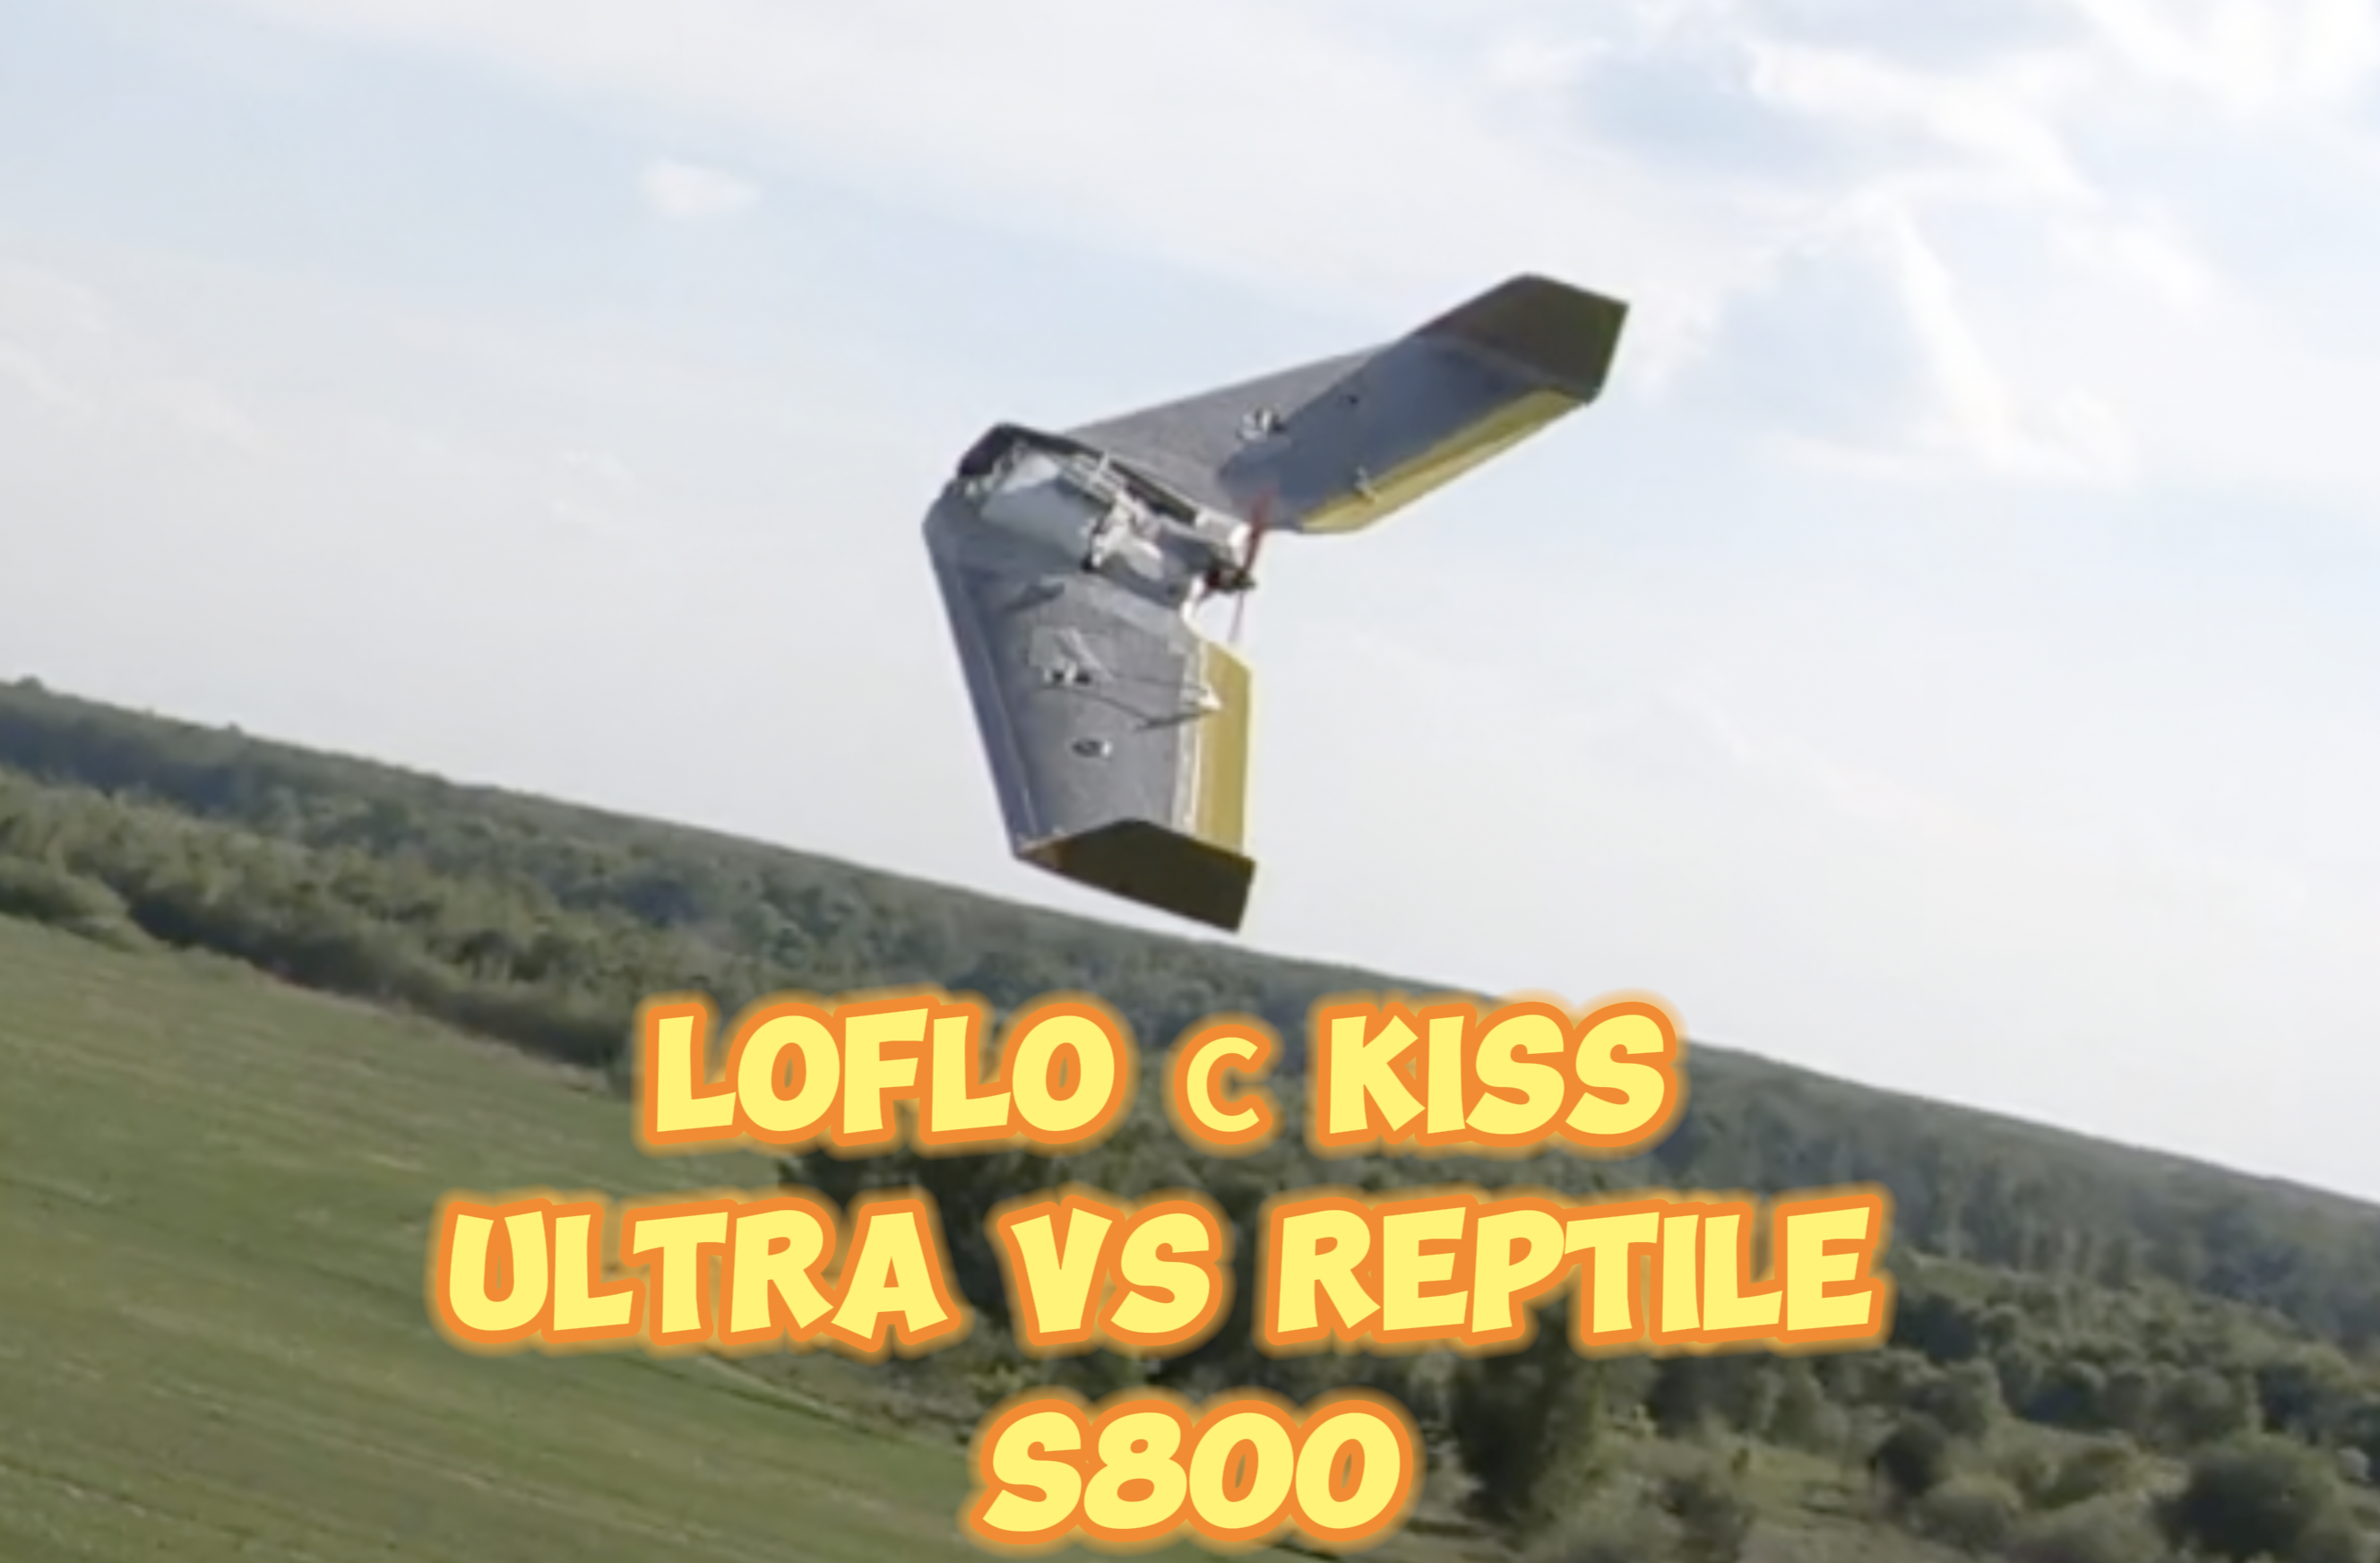 Loflo mike x edition с KISS ULTRA VS крыло REPTILE S800. FPV полёты